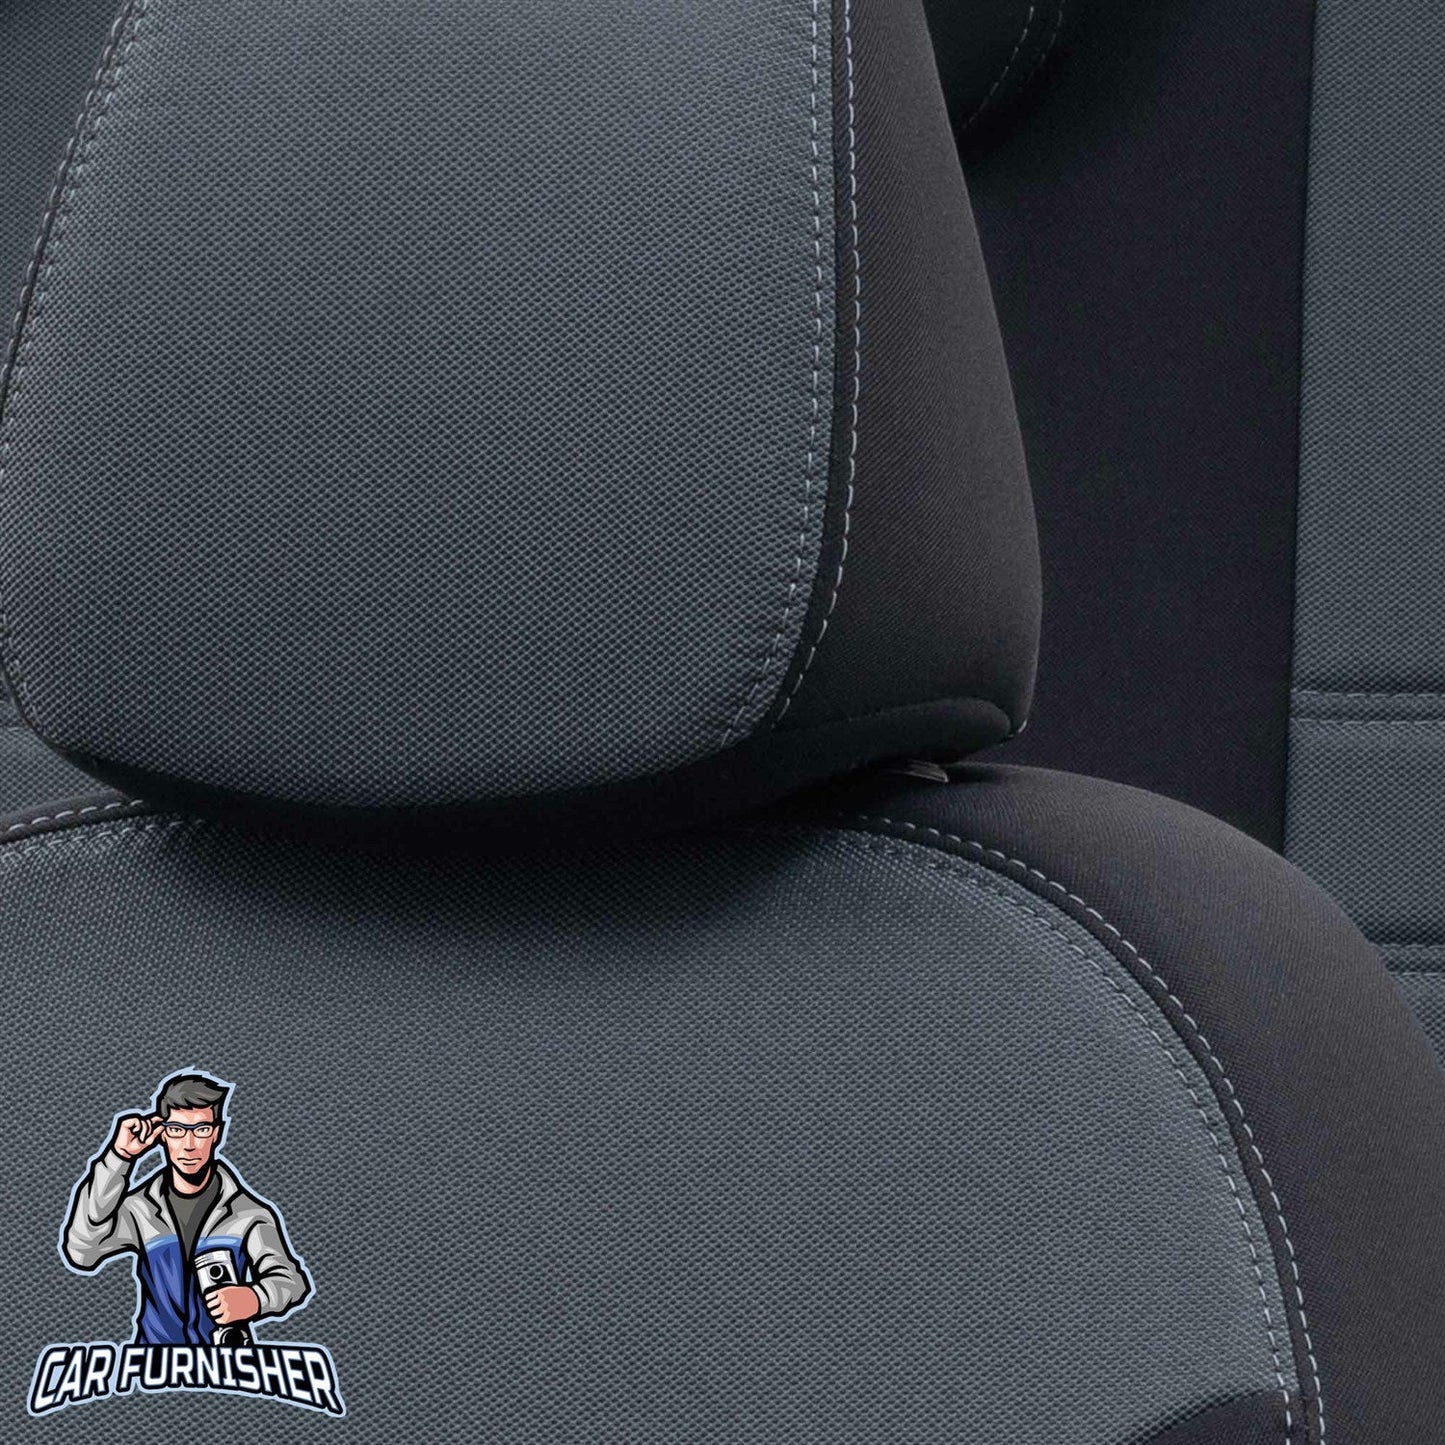 Volkswagen Scirocco Seat Cover Original Jacquard Design Smoked Black Jacquard Fabric